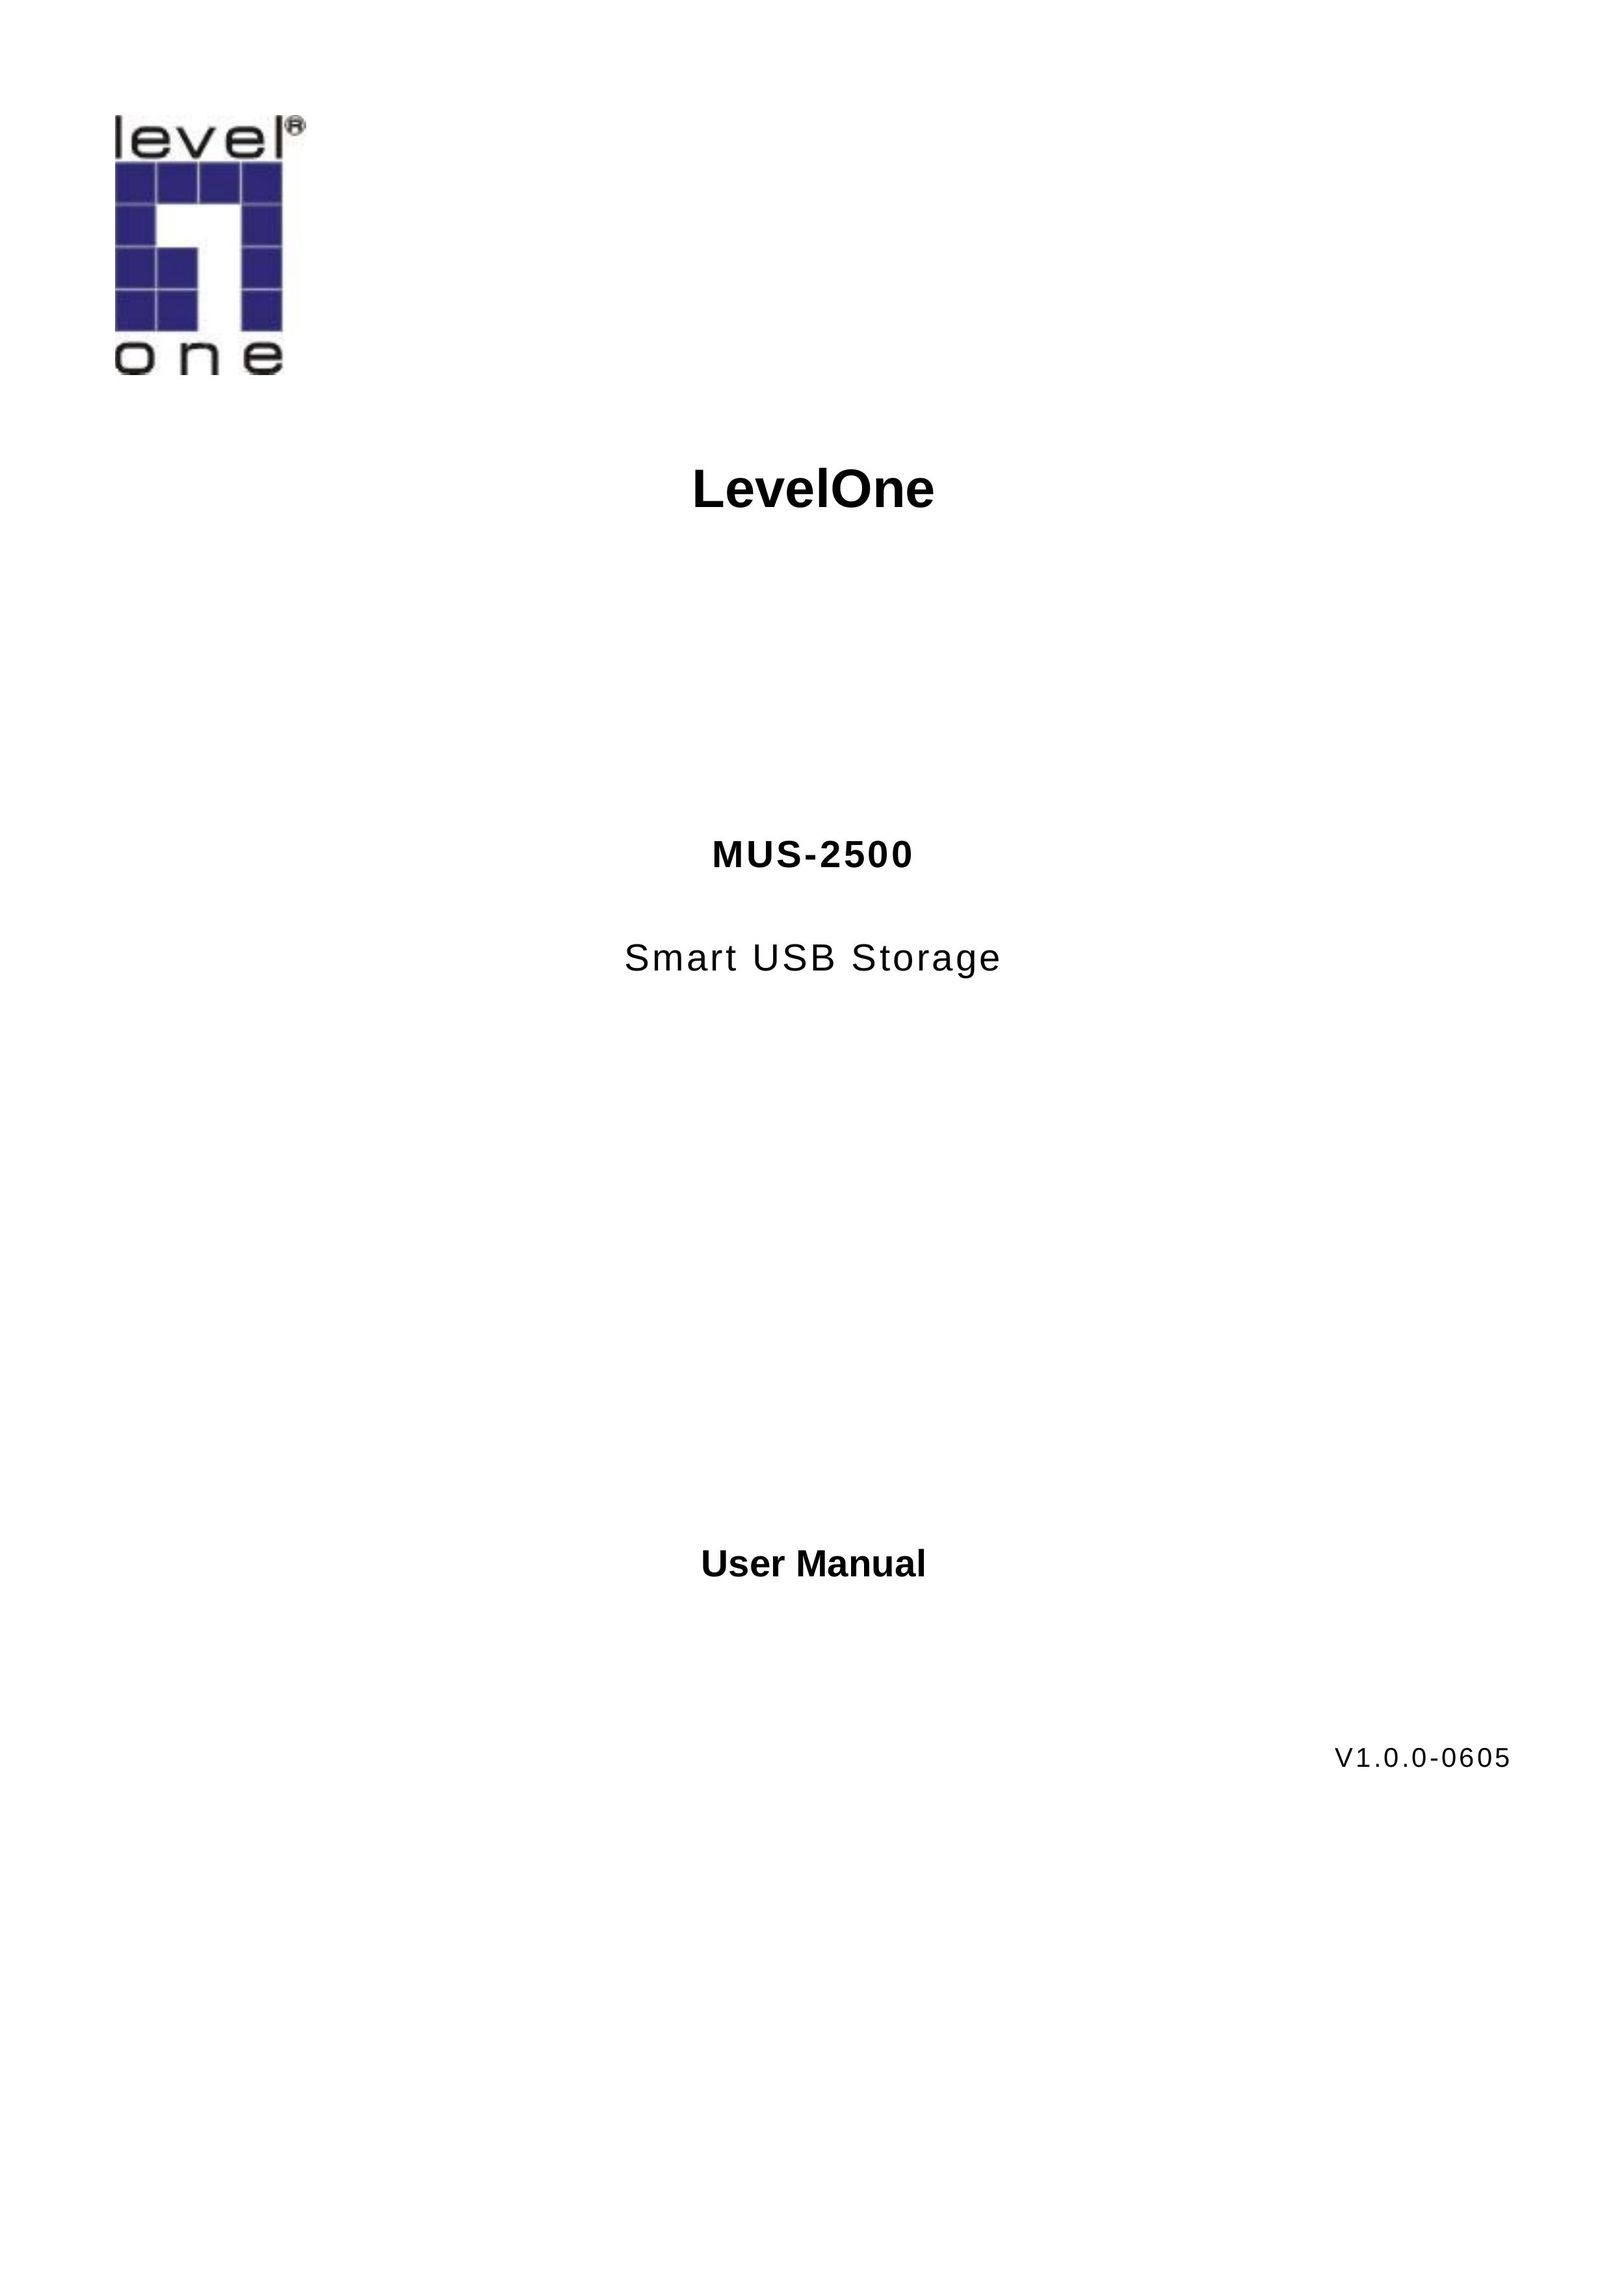 LevelOne MUS-2500 Computer Drive User Manual